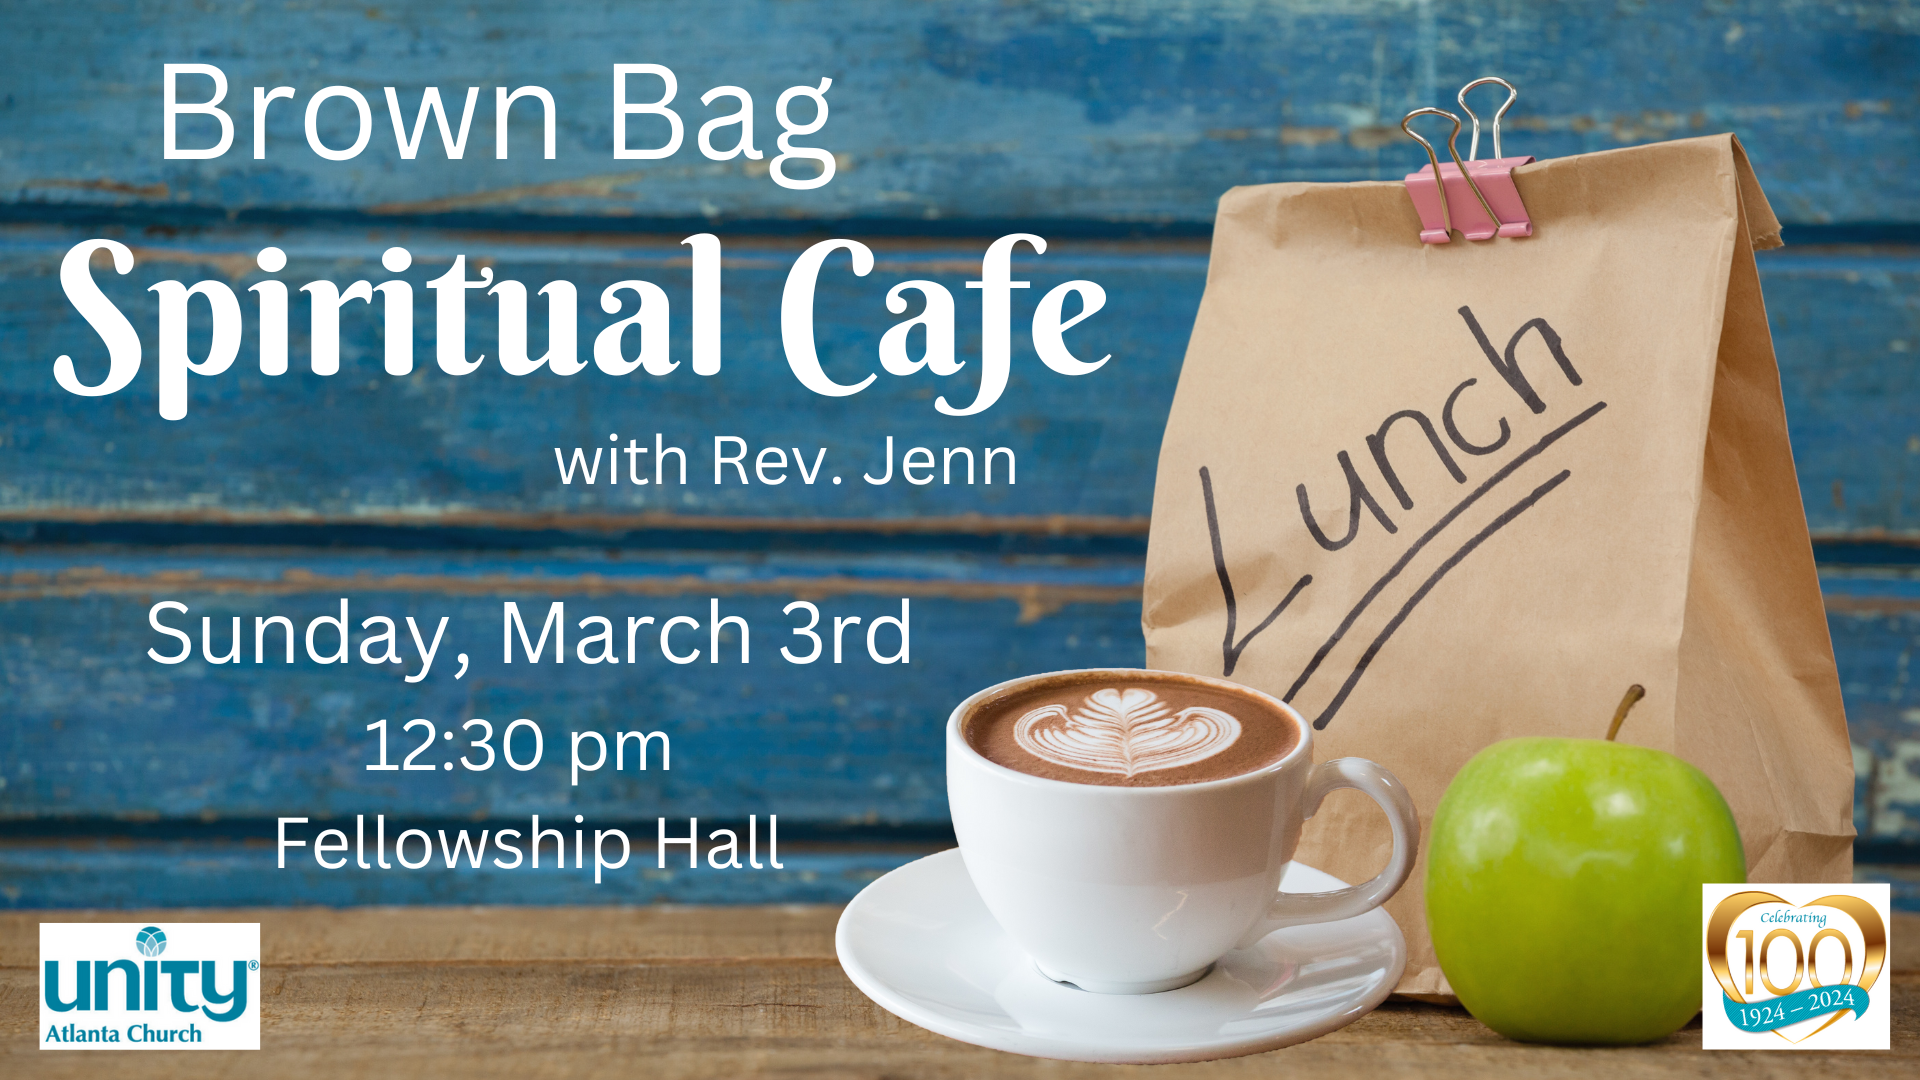 Brown Bag Spiritual Café with Rev. Jenn - Unity Atlanta Church